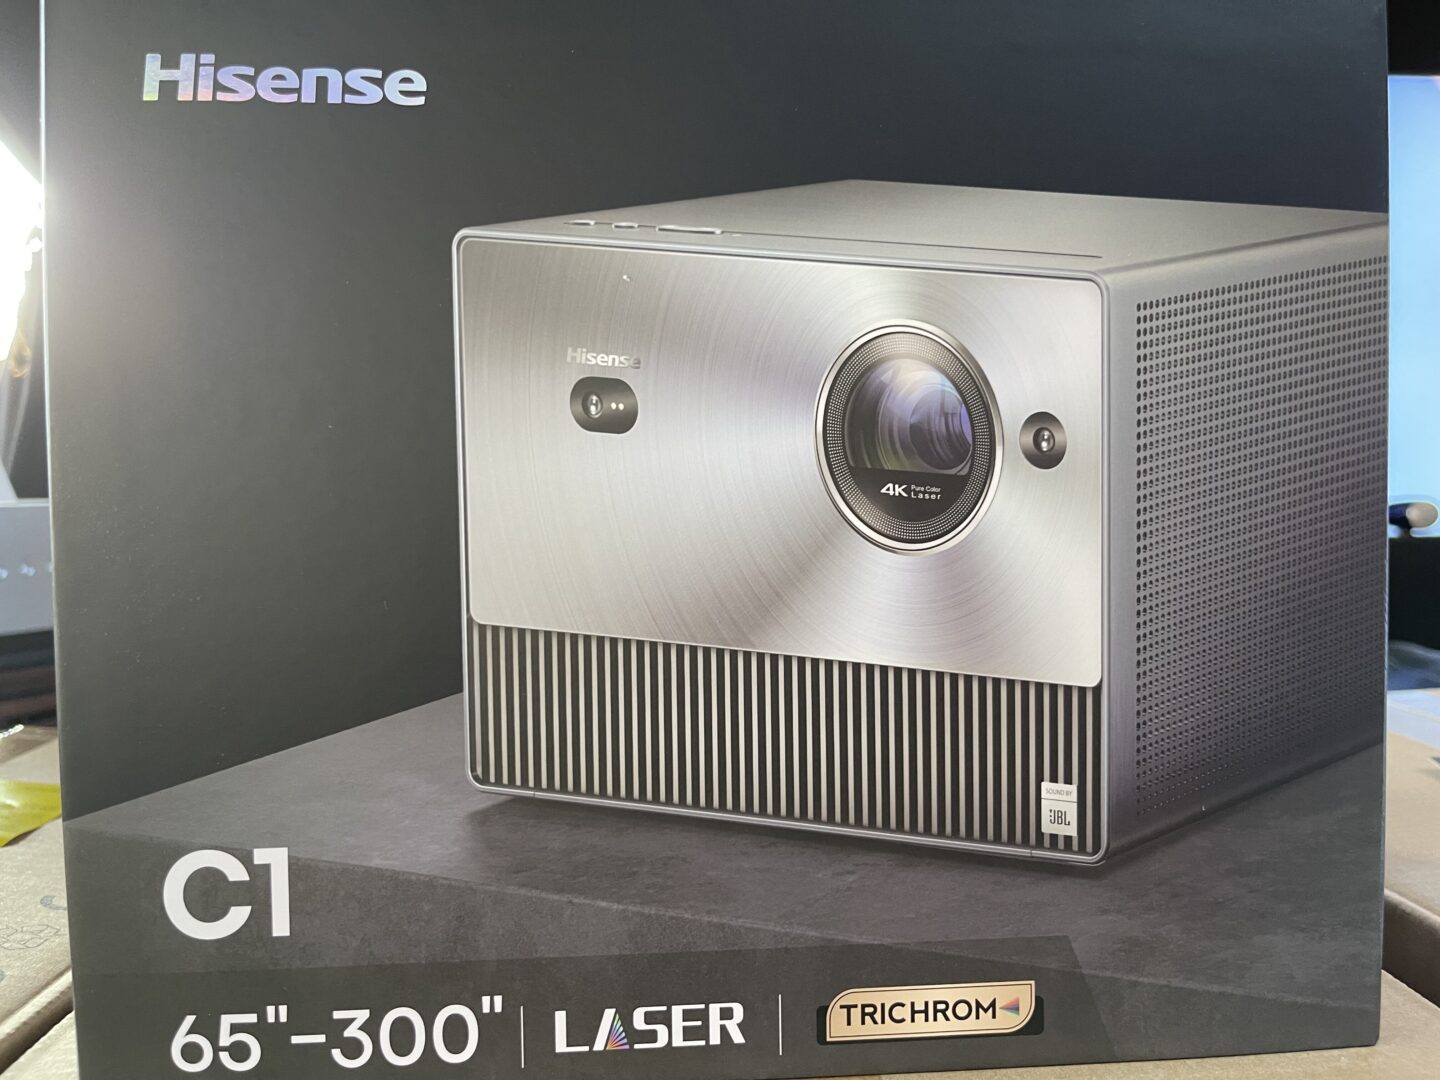 Hisense C1 Laser Mini Projector